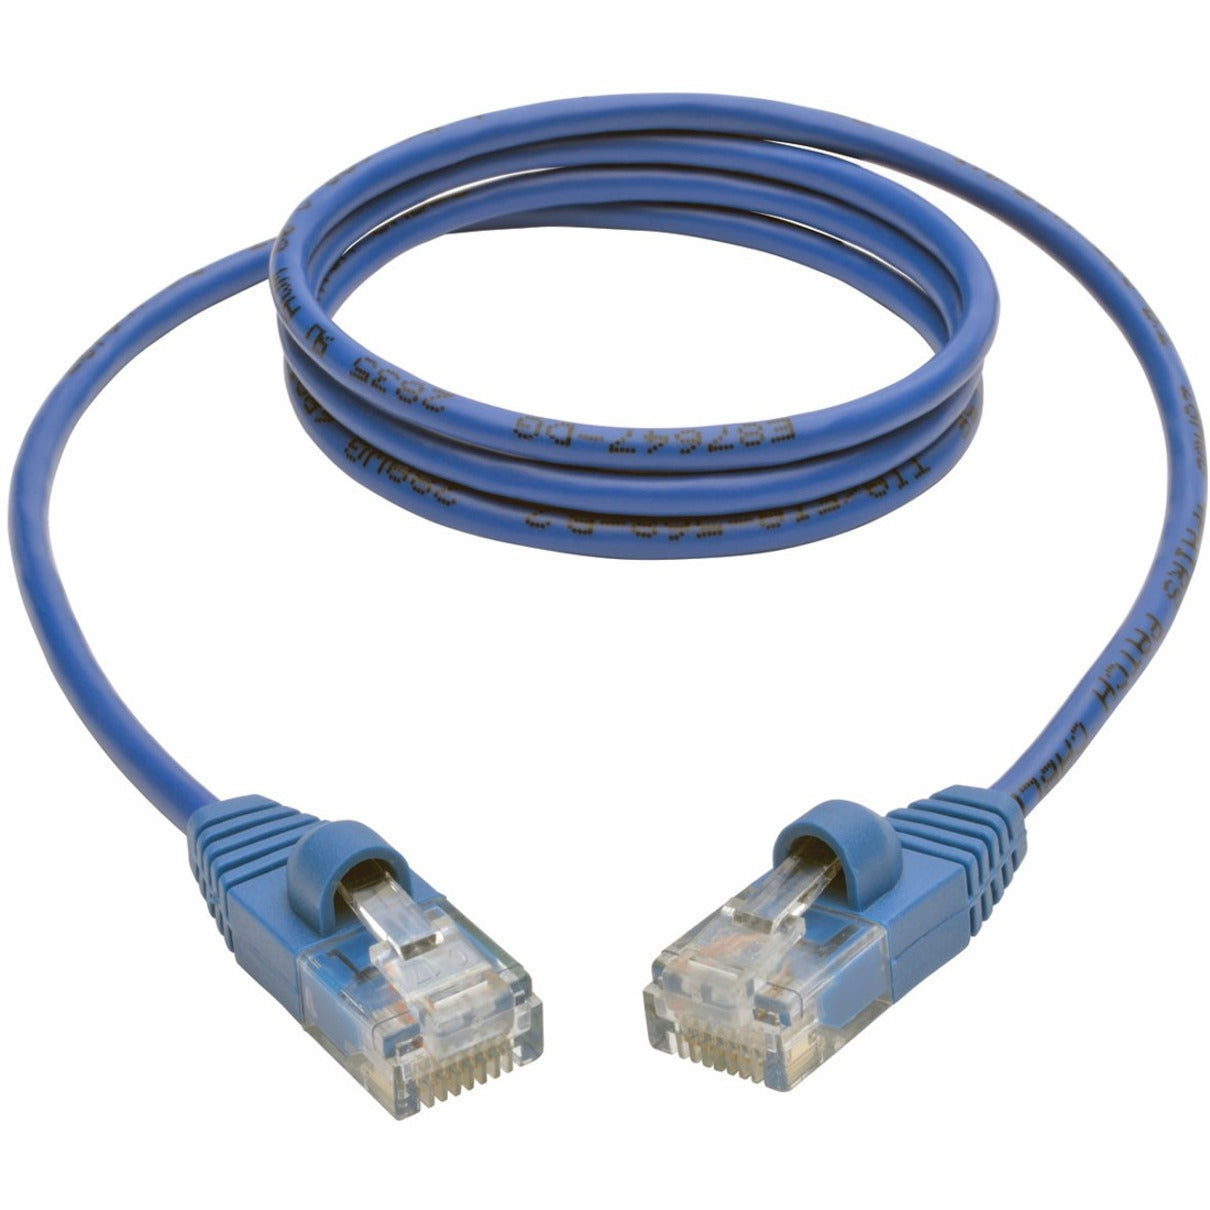 Tripp Lite N001-S03-BL Cat5e 350 MHz Snagless Molded Slim UTP Patch Cable (RJ45 M/M), Blue, 3ft, Lifetime Warranty